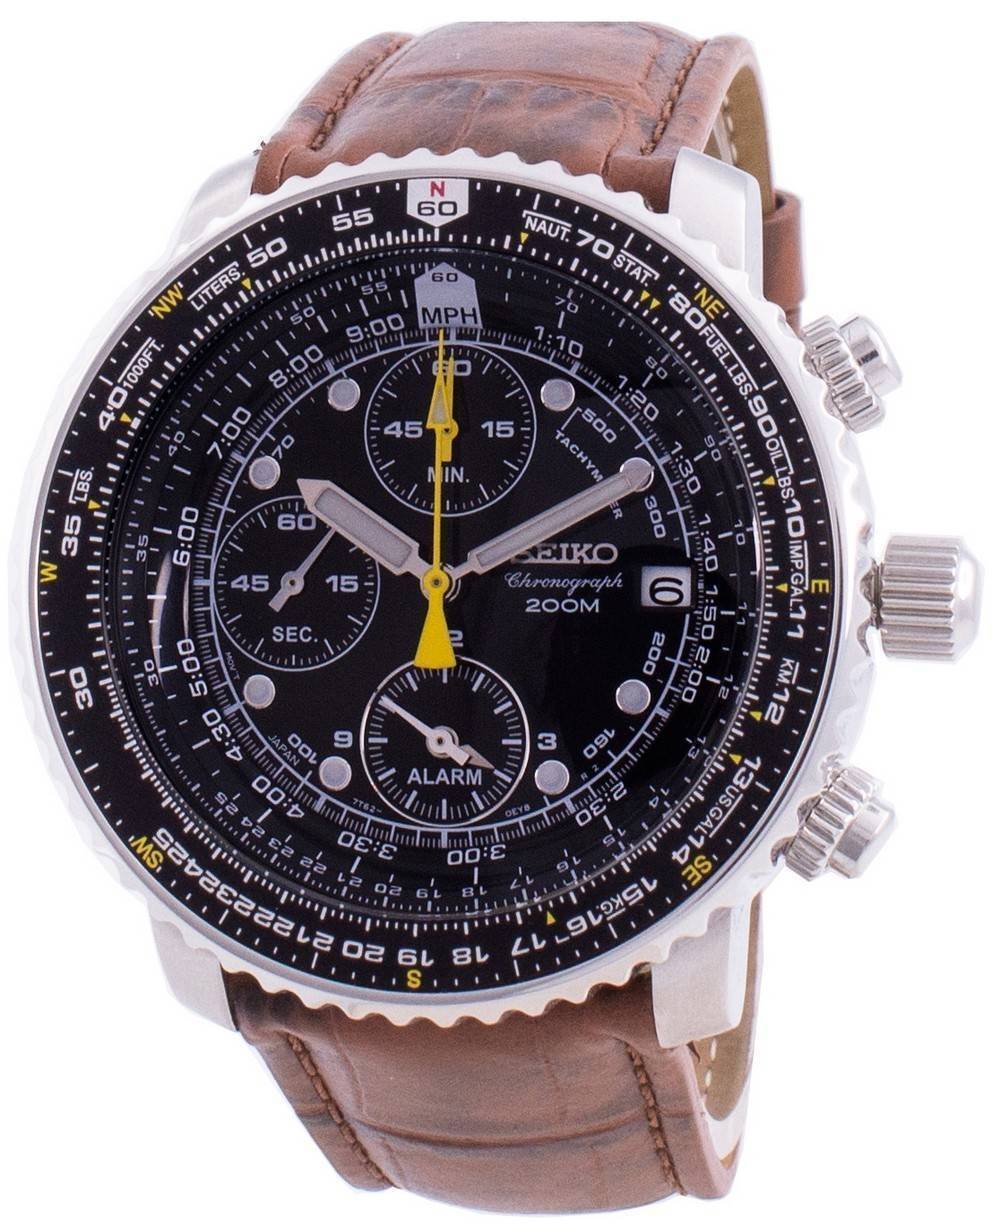 Seiko Pilot's Watch - Seiko Aviation, Flightmaster, Chronograph Watches